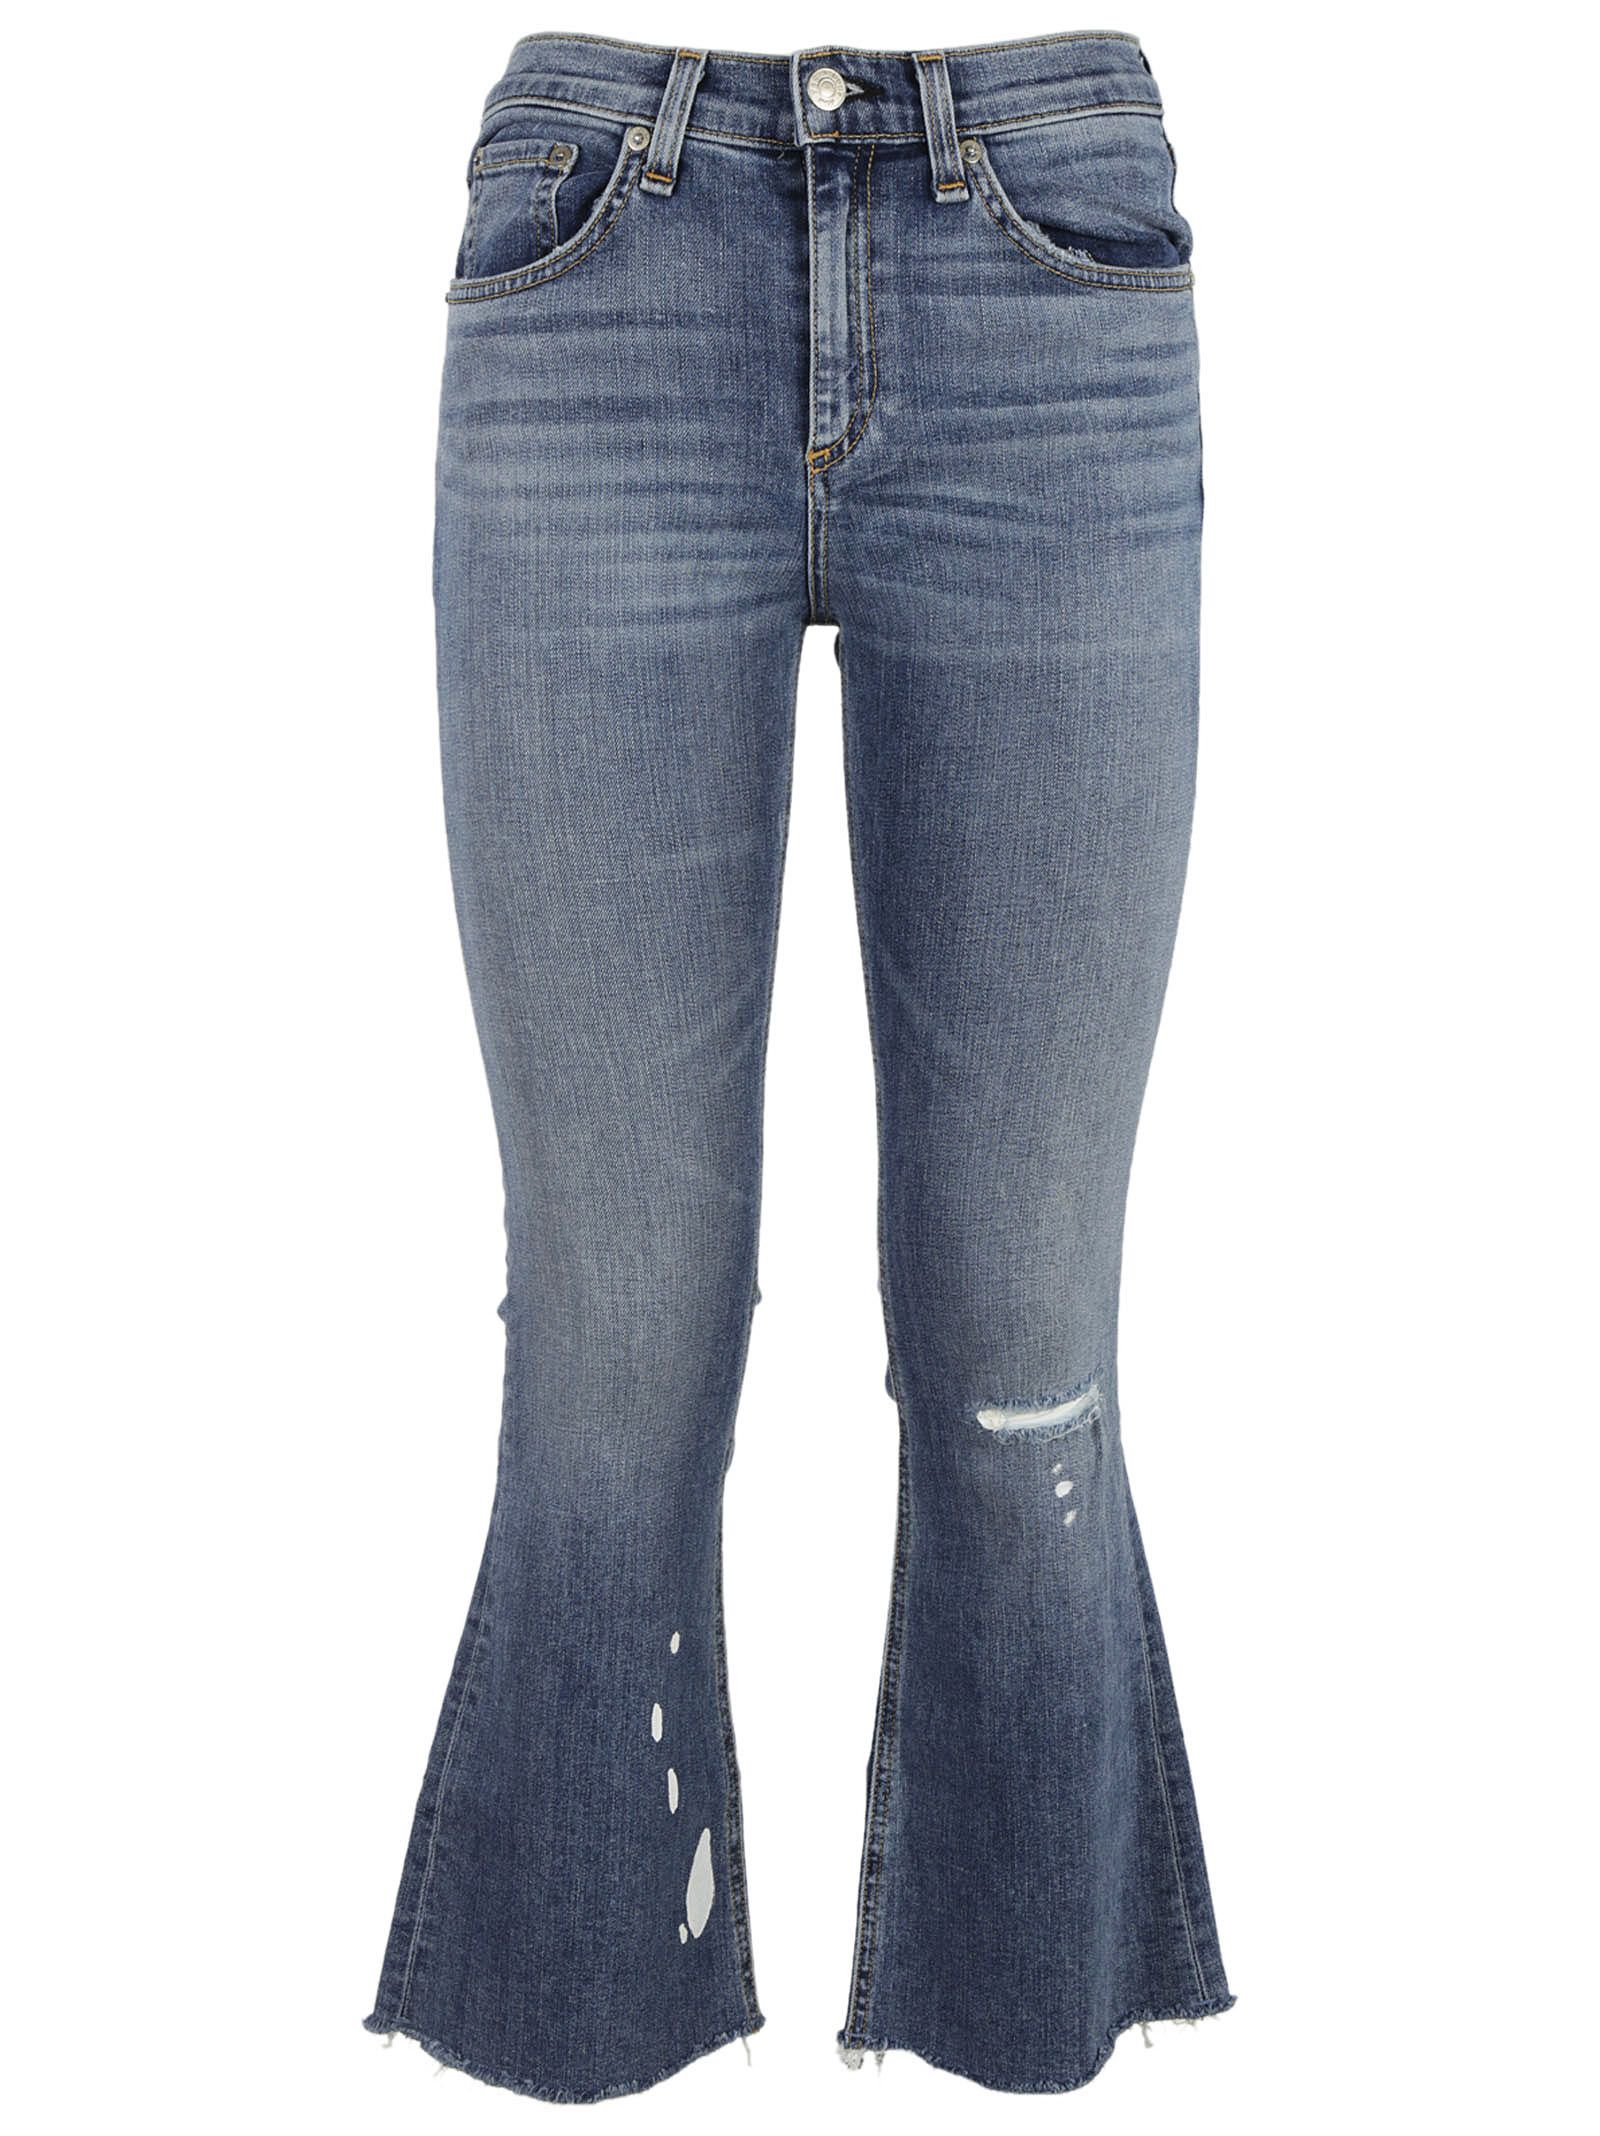 Rag & Bone - Rag & Bone Crop Flare Jeans - Maybrook, Women's Jeans